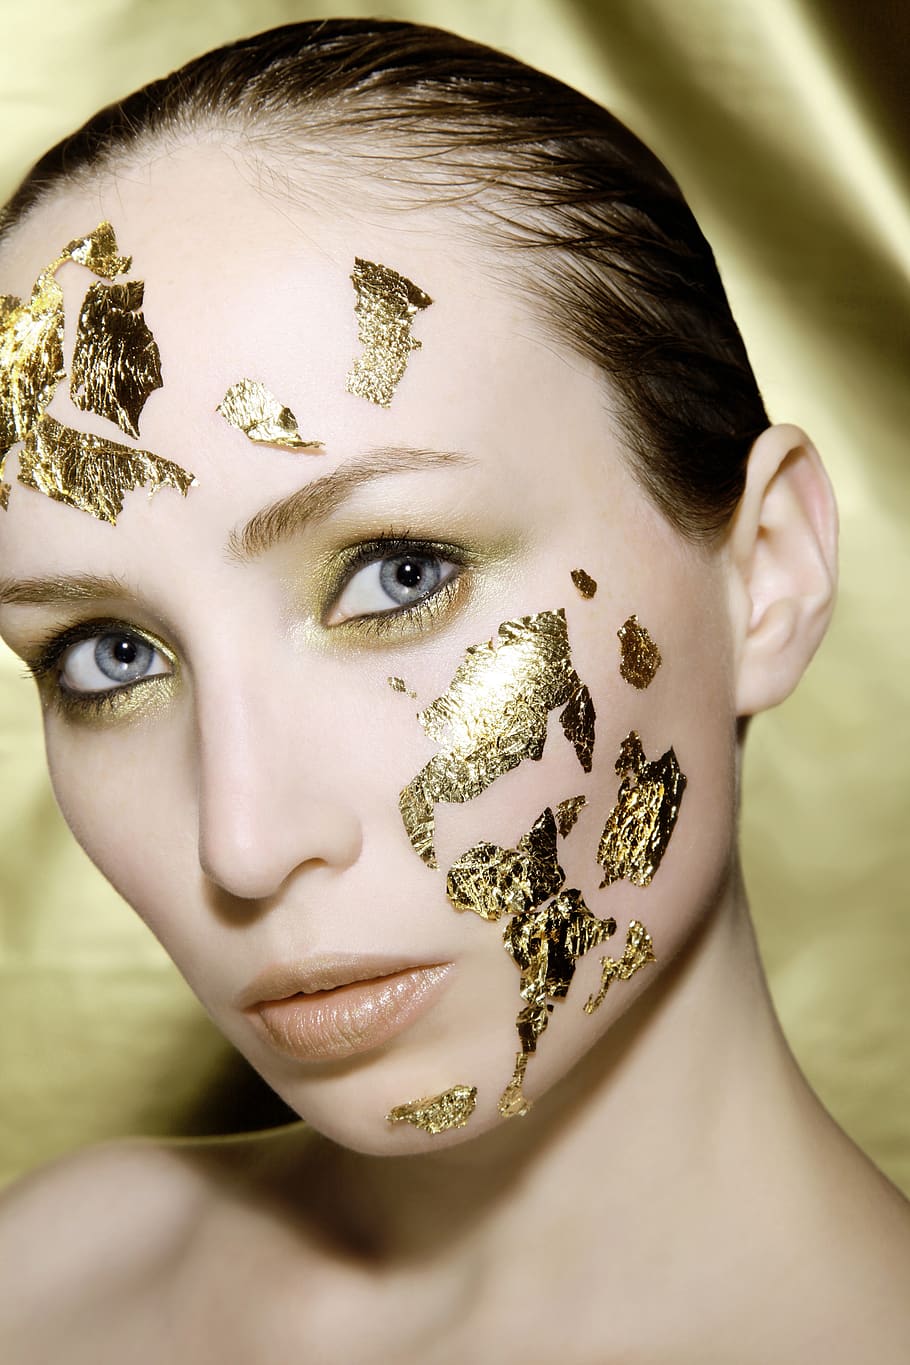 emas, daun emas, serpih, makeup, make up, kemewahan, kecantikan, kulit, perawatan, perawatan kulit